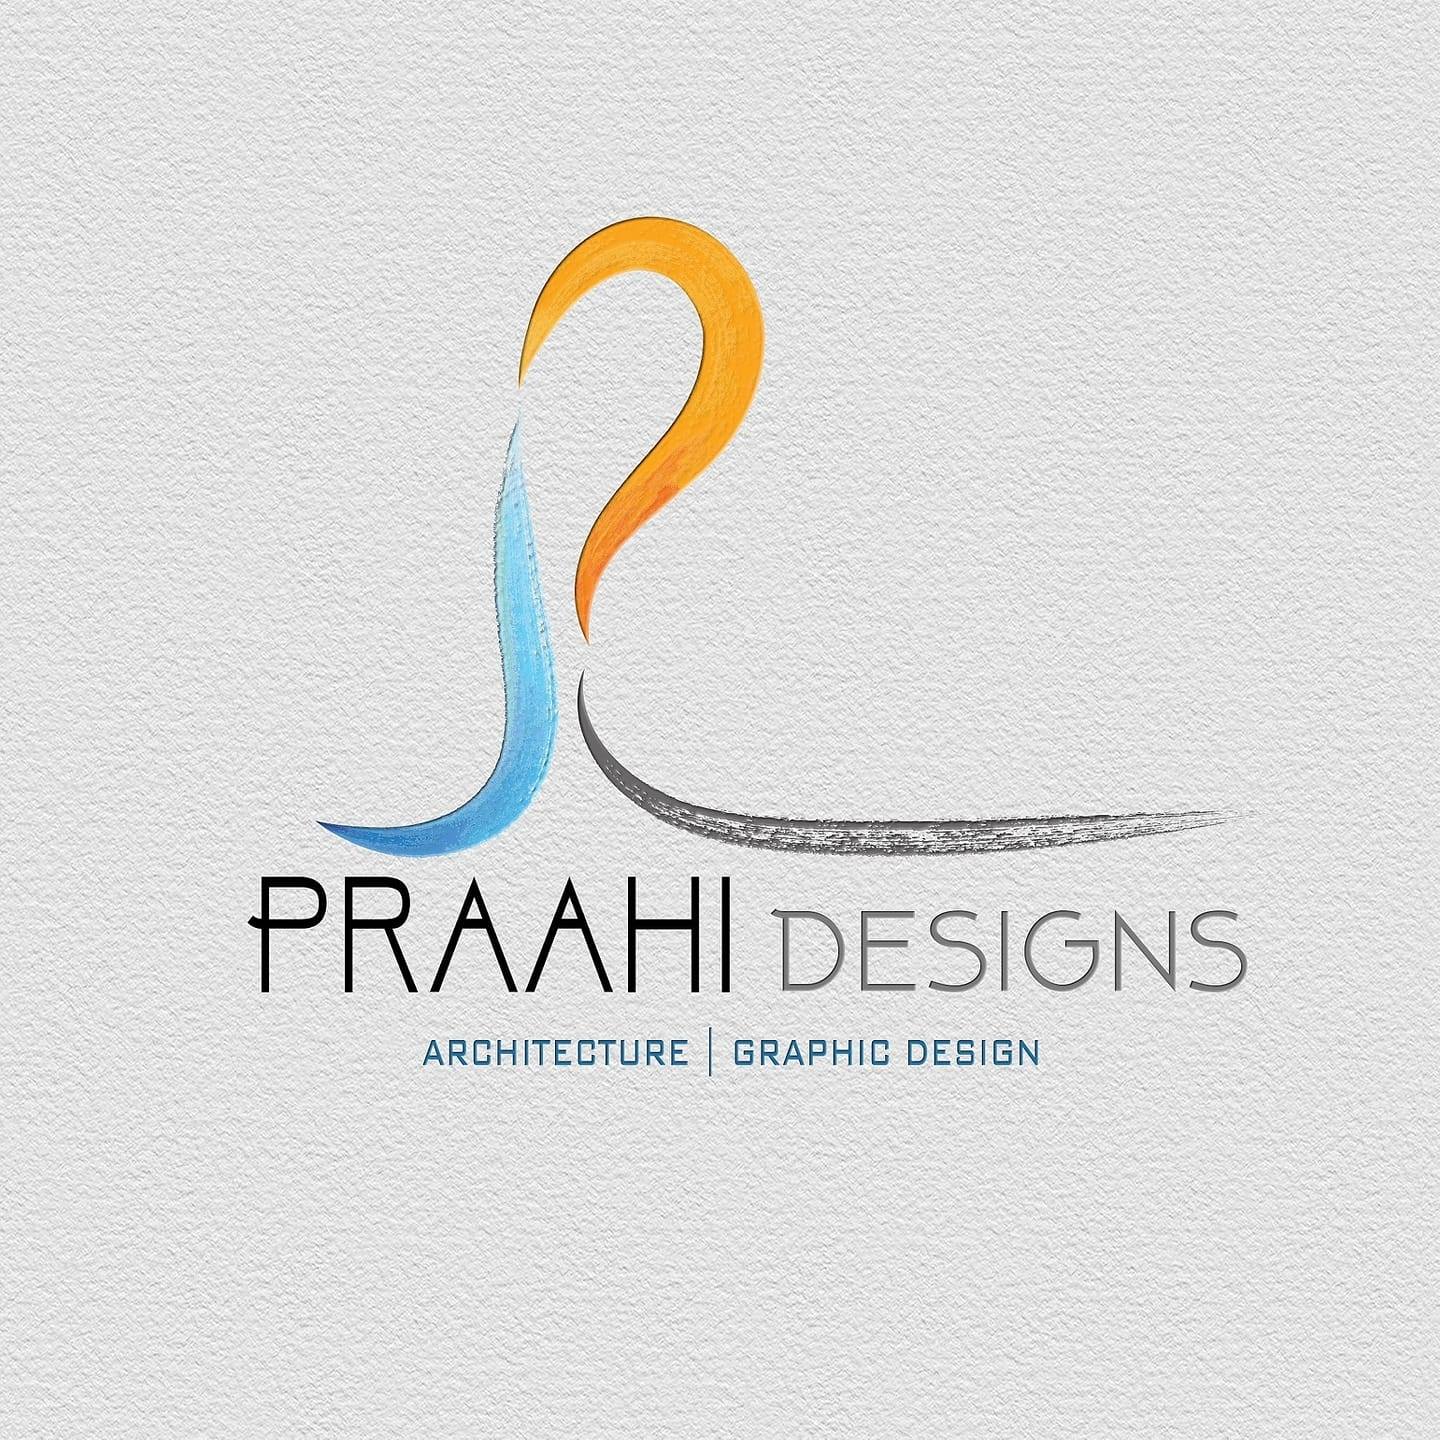 Praahi Designs|Architect|Professional Services